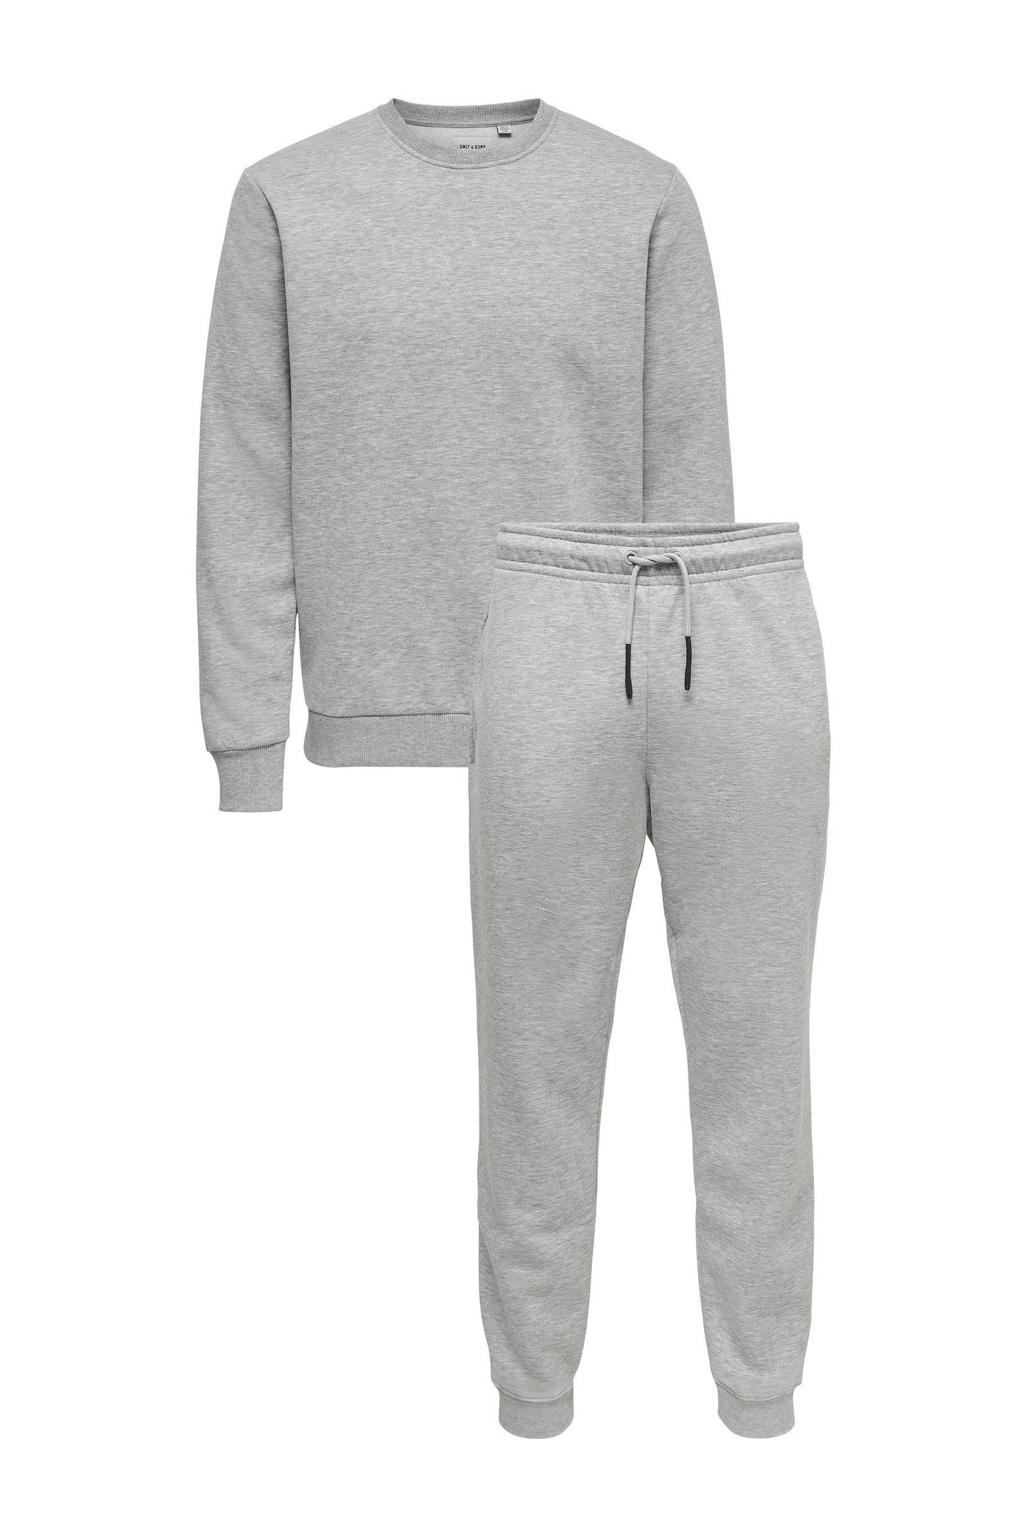 ONLY & SONS hoodie + joggingbroek ONSCERES light grey melange